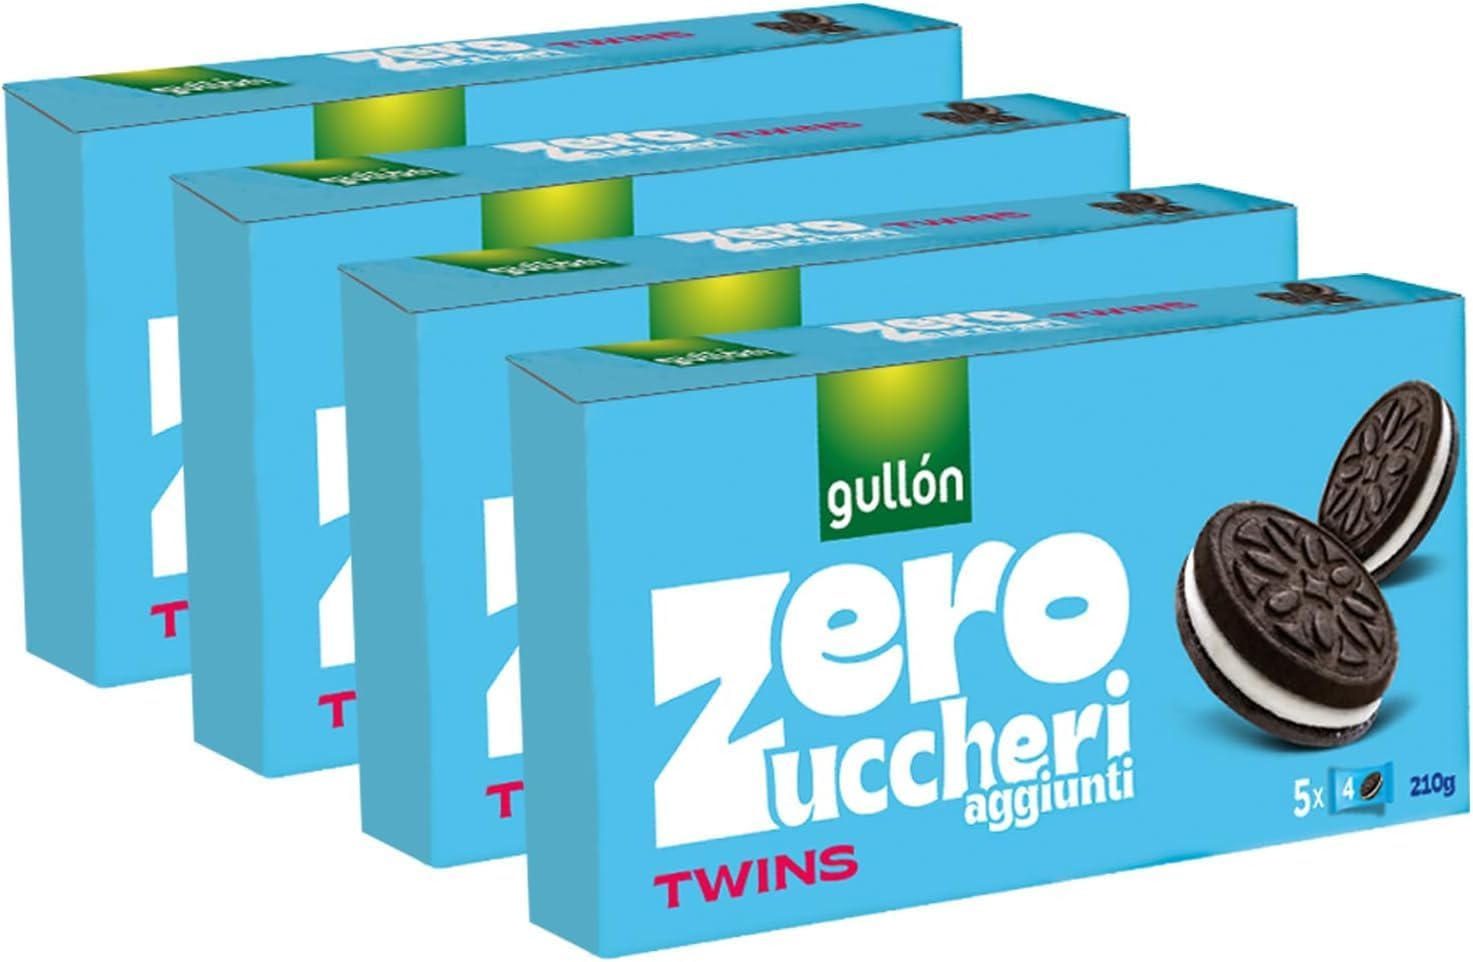 4x Biscotti Gullon Twins Zero Zuccheri Aggiunti 4 pezzi Tot 840 gr.